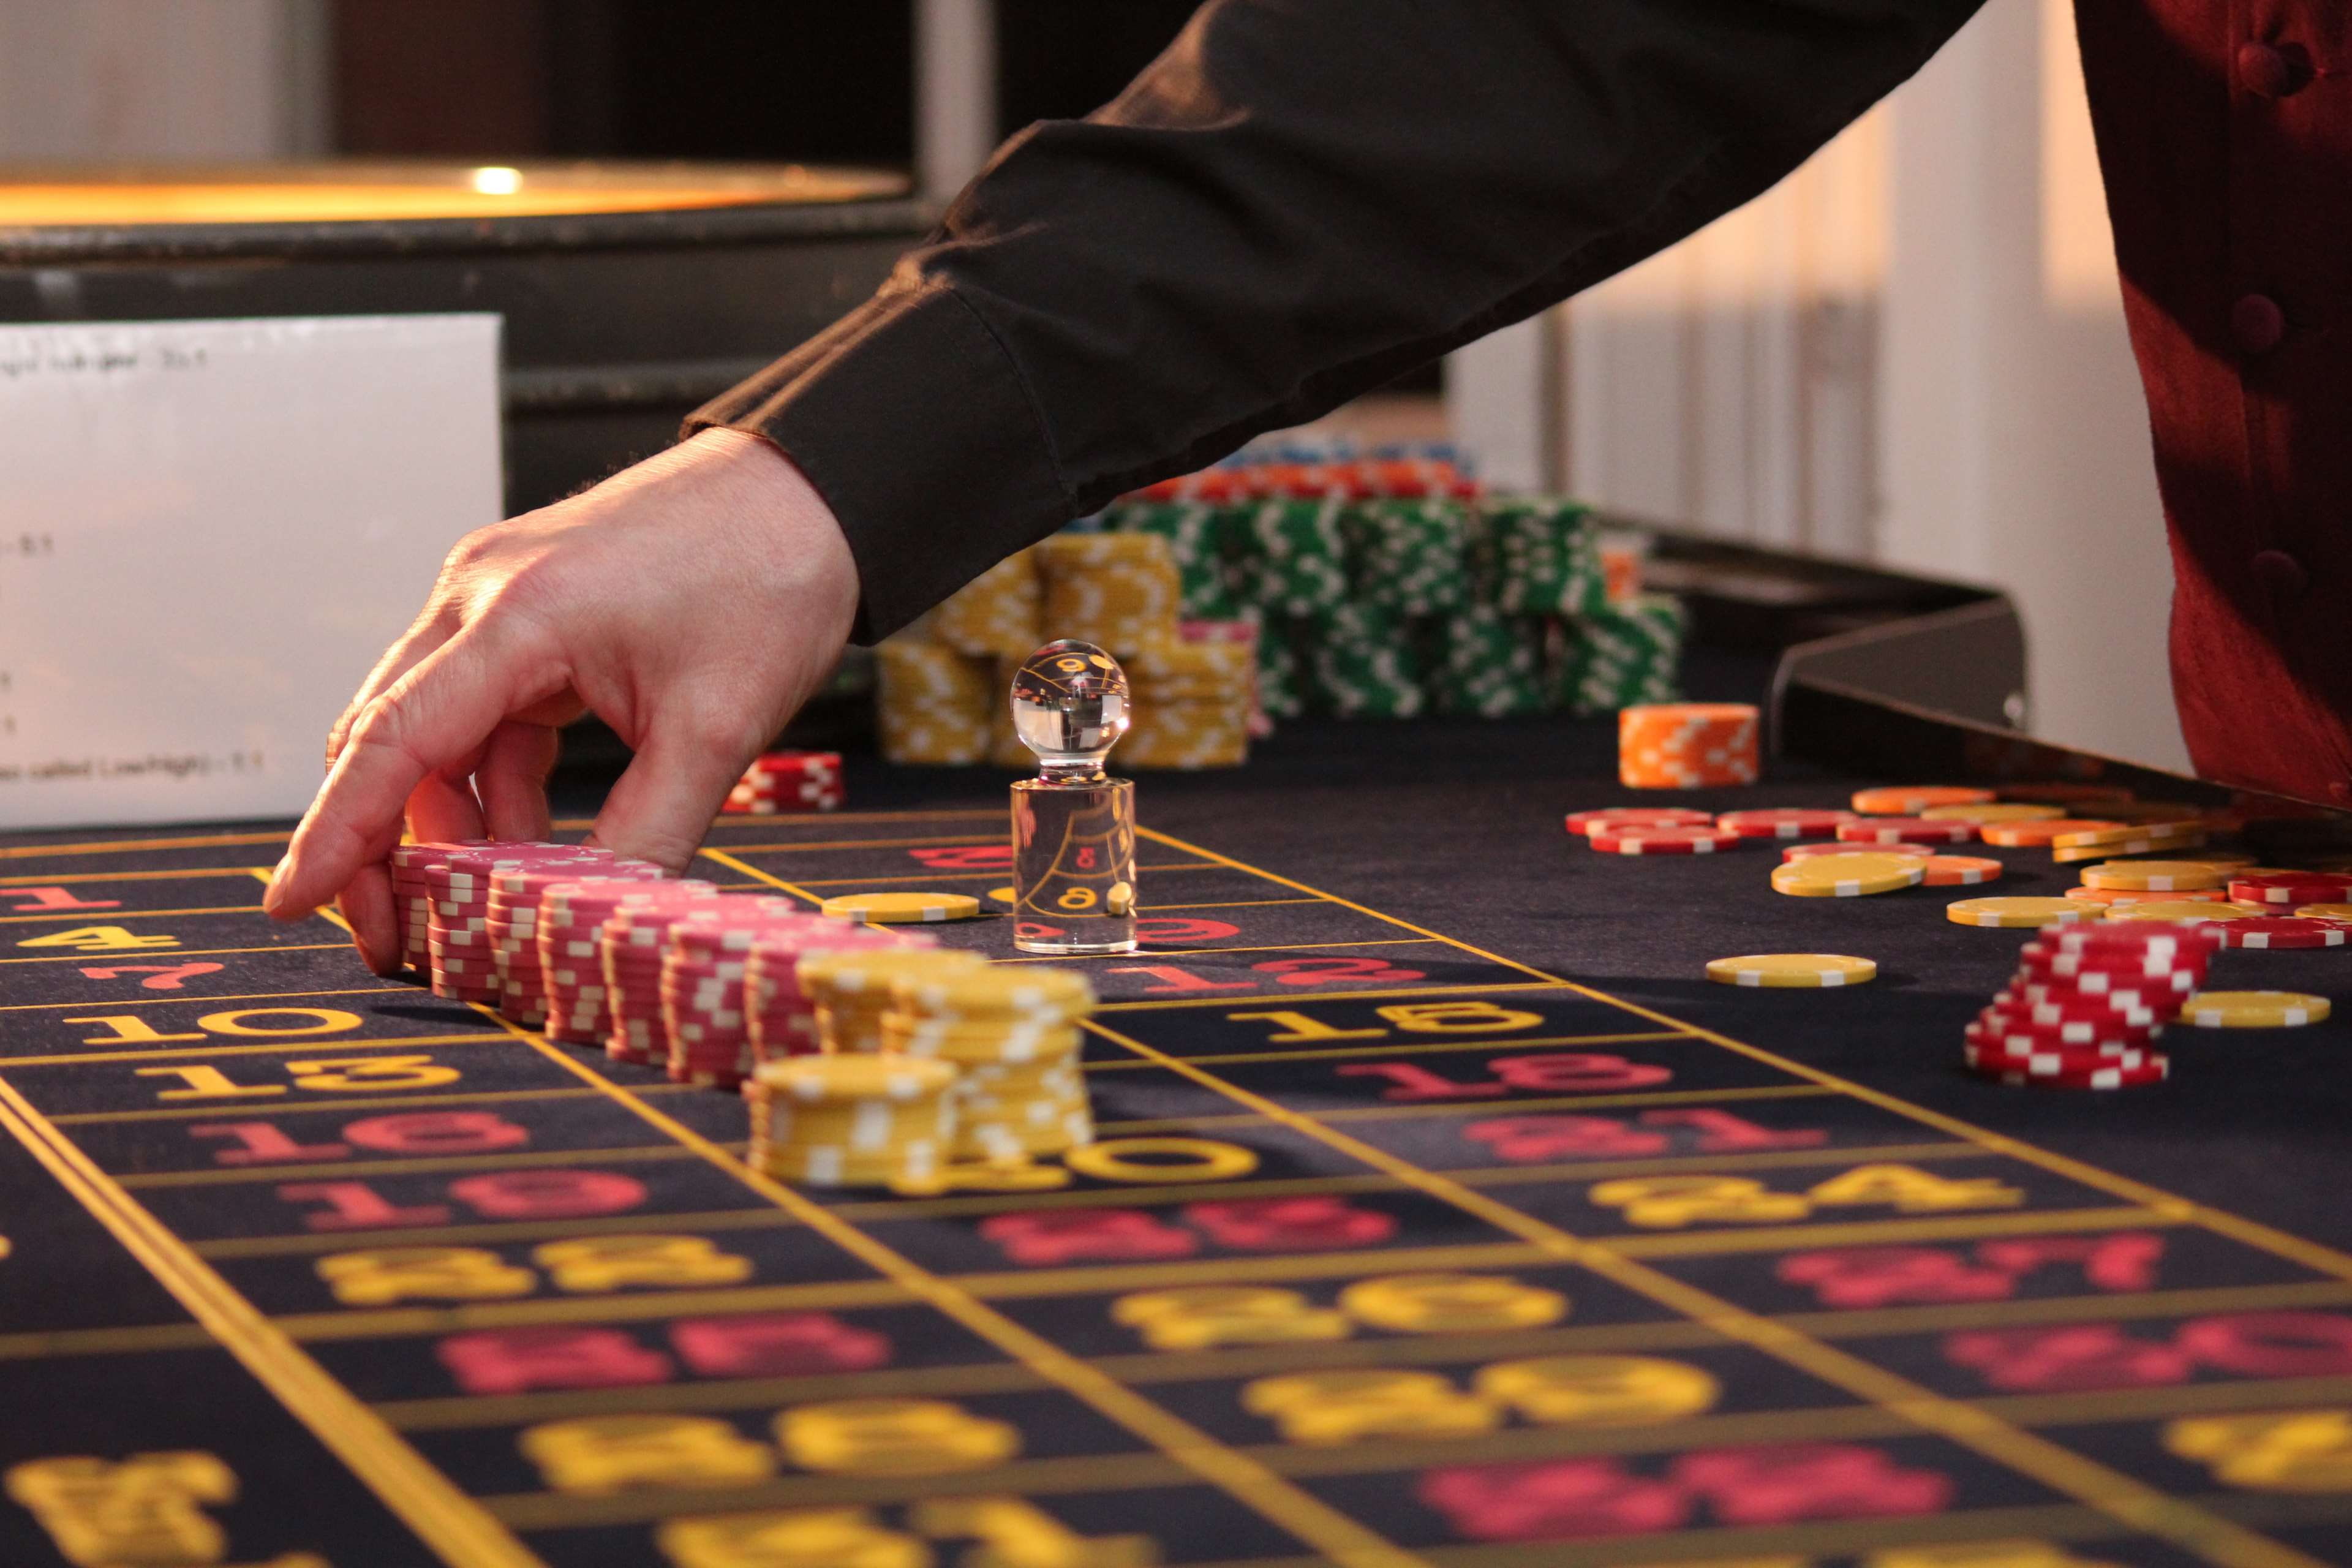 addiction, bet, betting, casino, chance, chips, croupier, entertainment